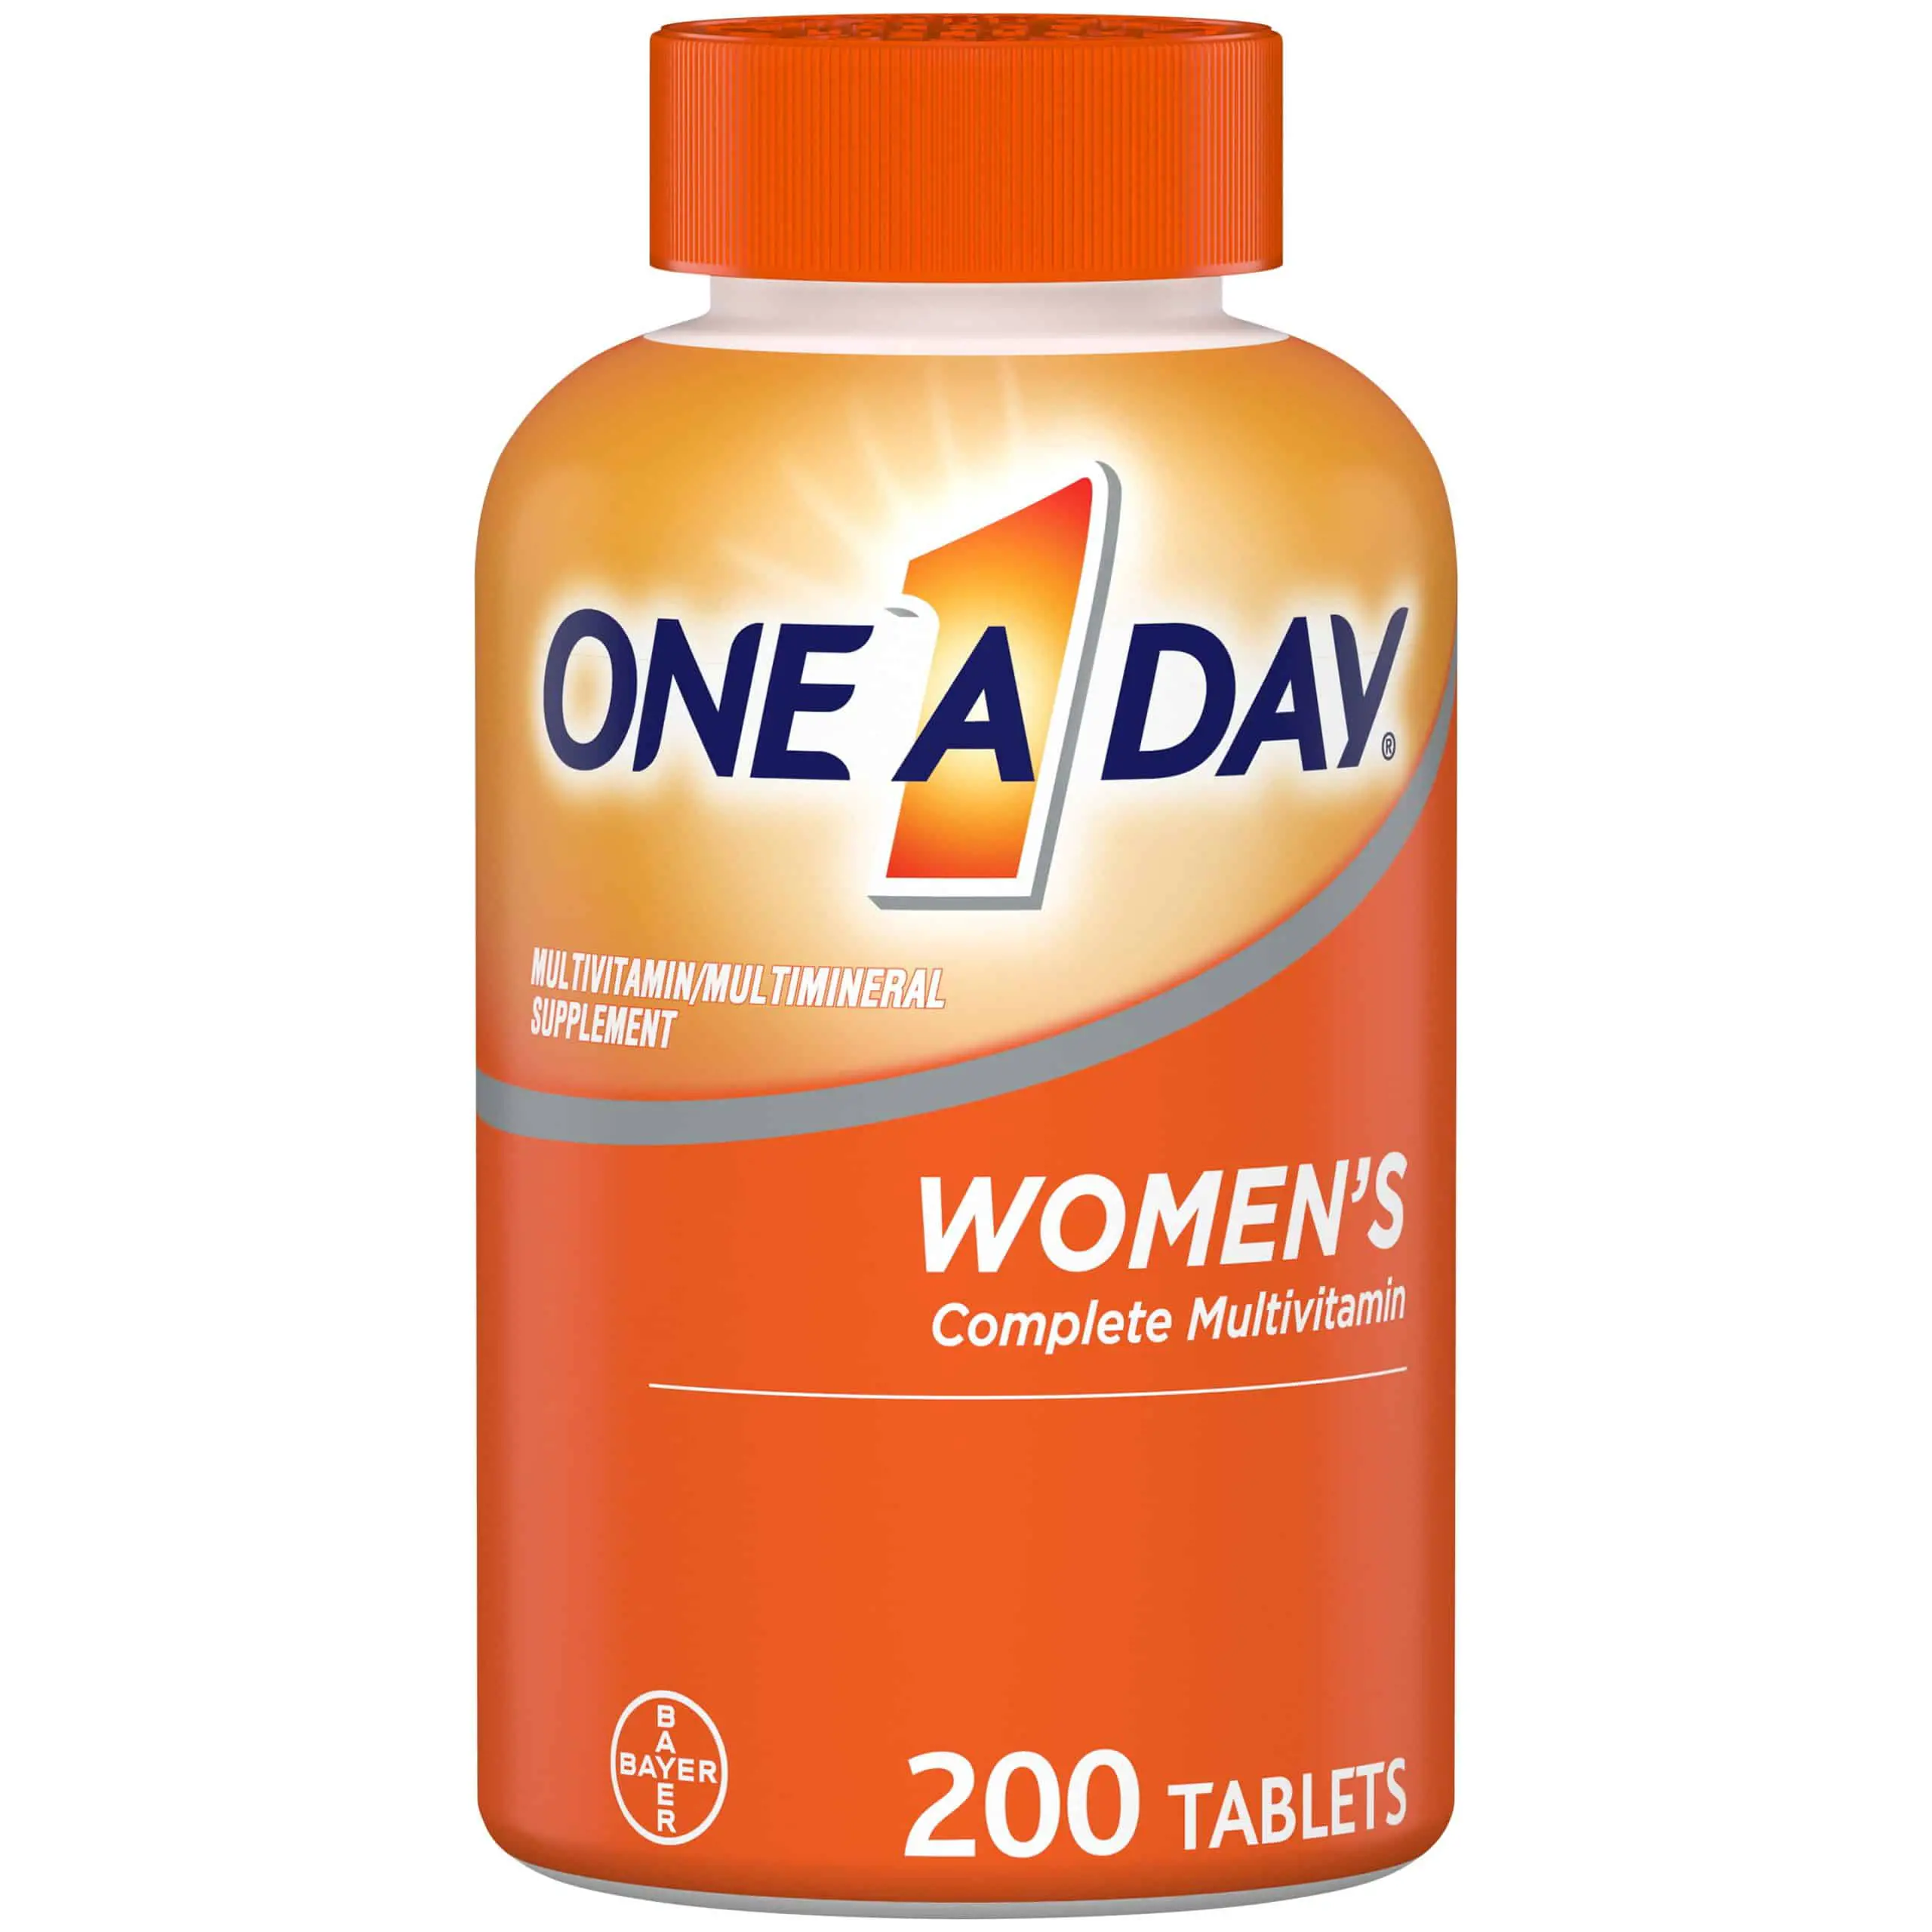 One A Day Multivitamins for Women, Women